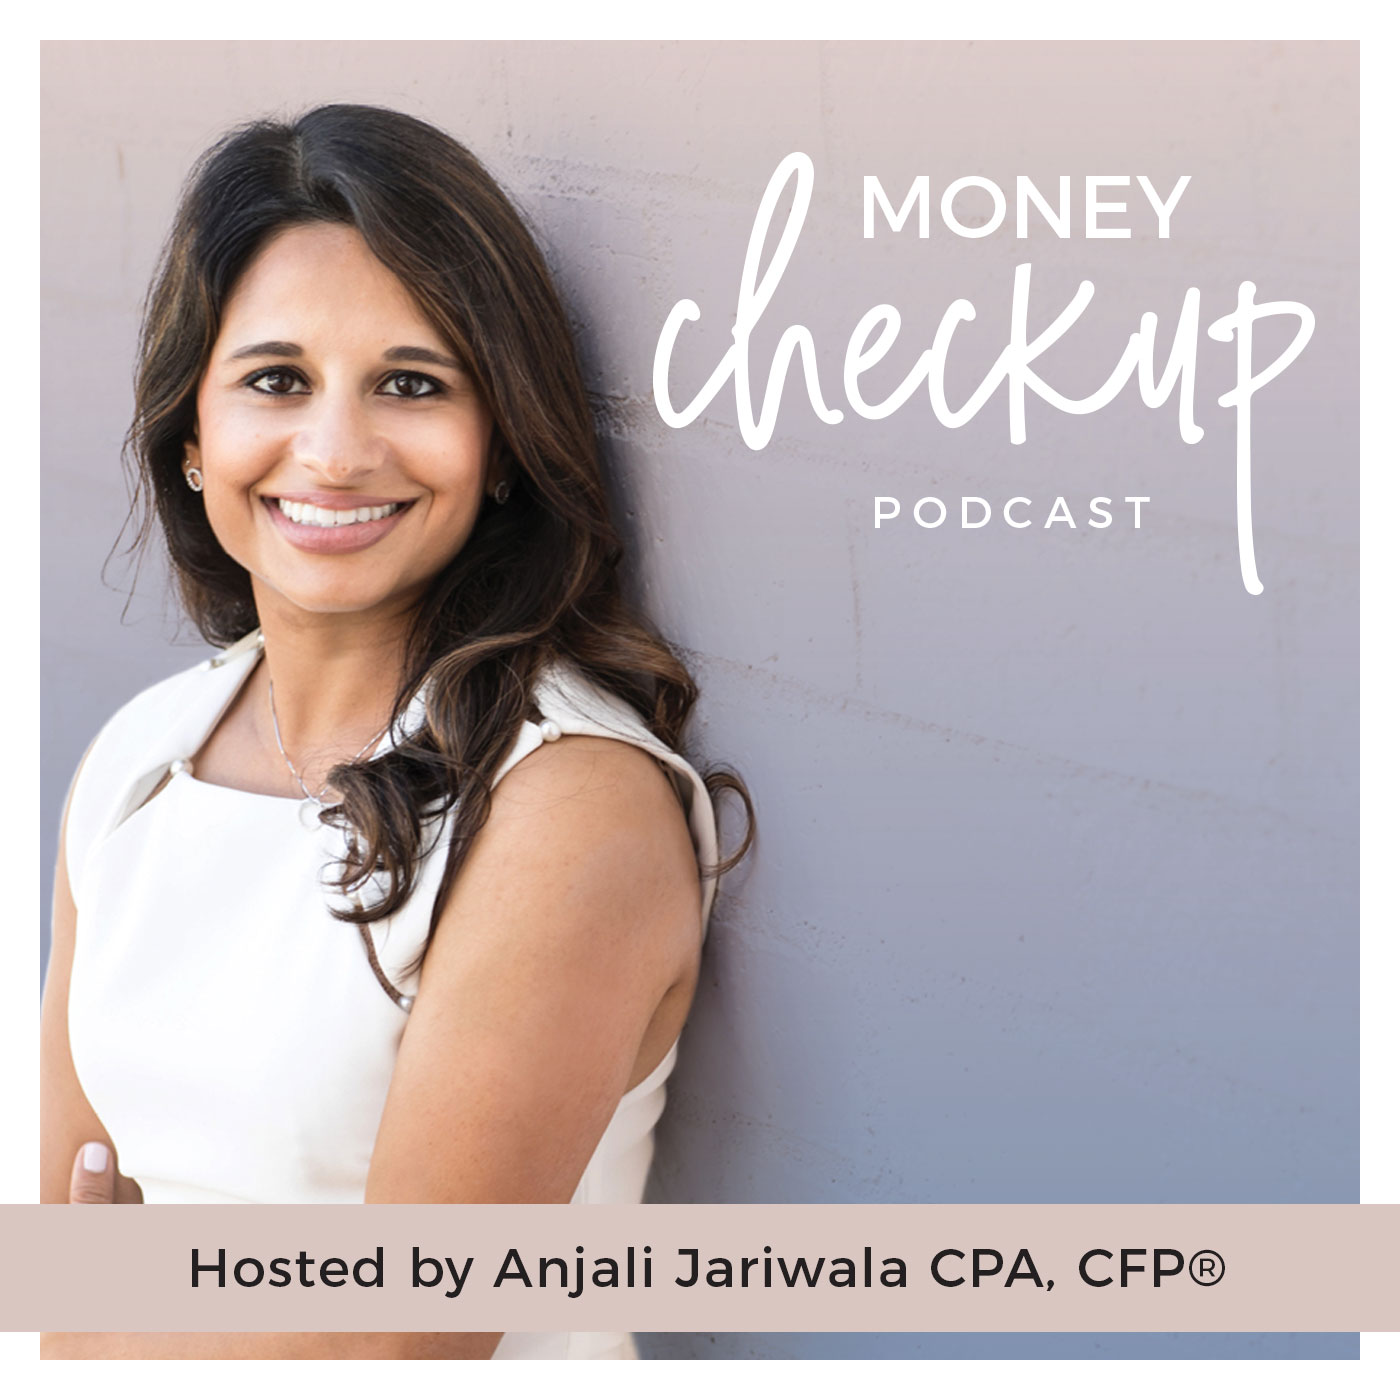 Money Checkup Podcast